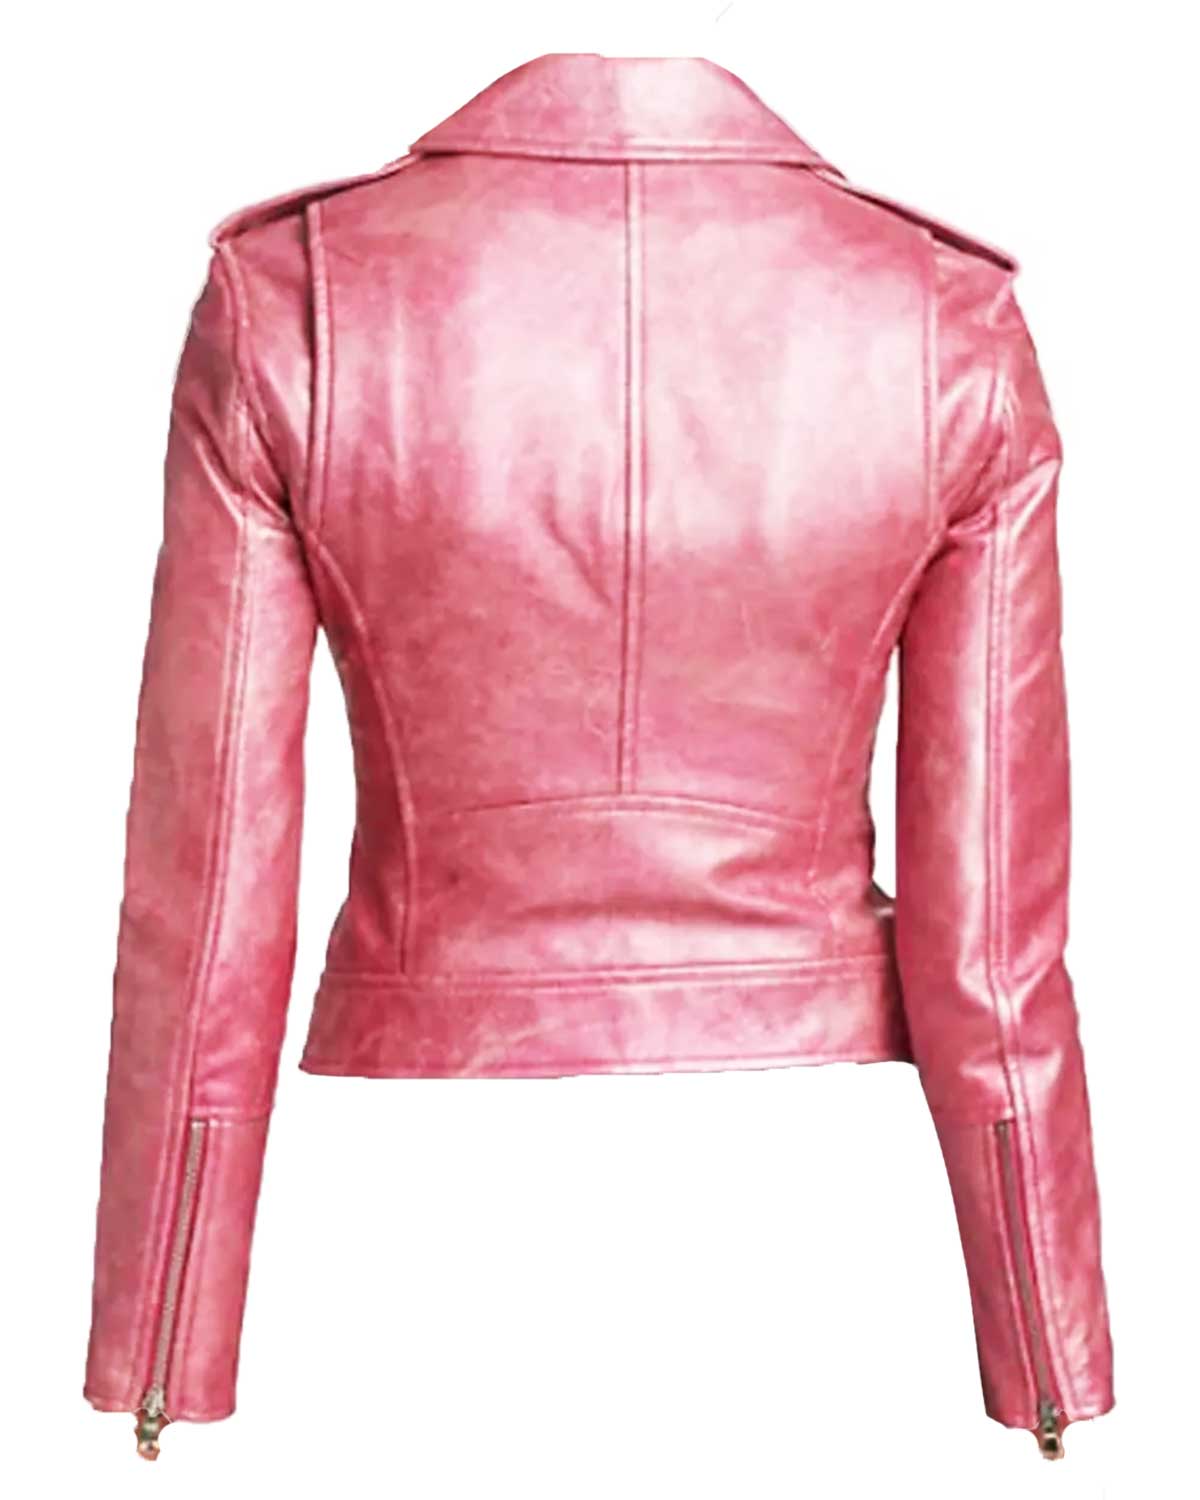 Riverdale S05 Ashleigh Murray Pink Leather Biker Jacket